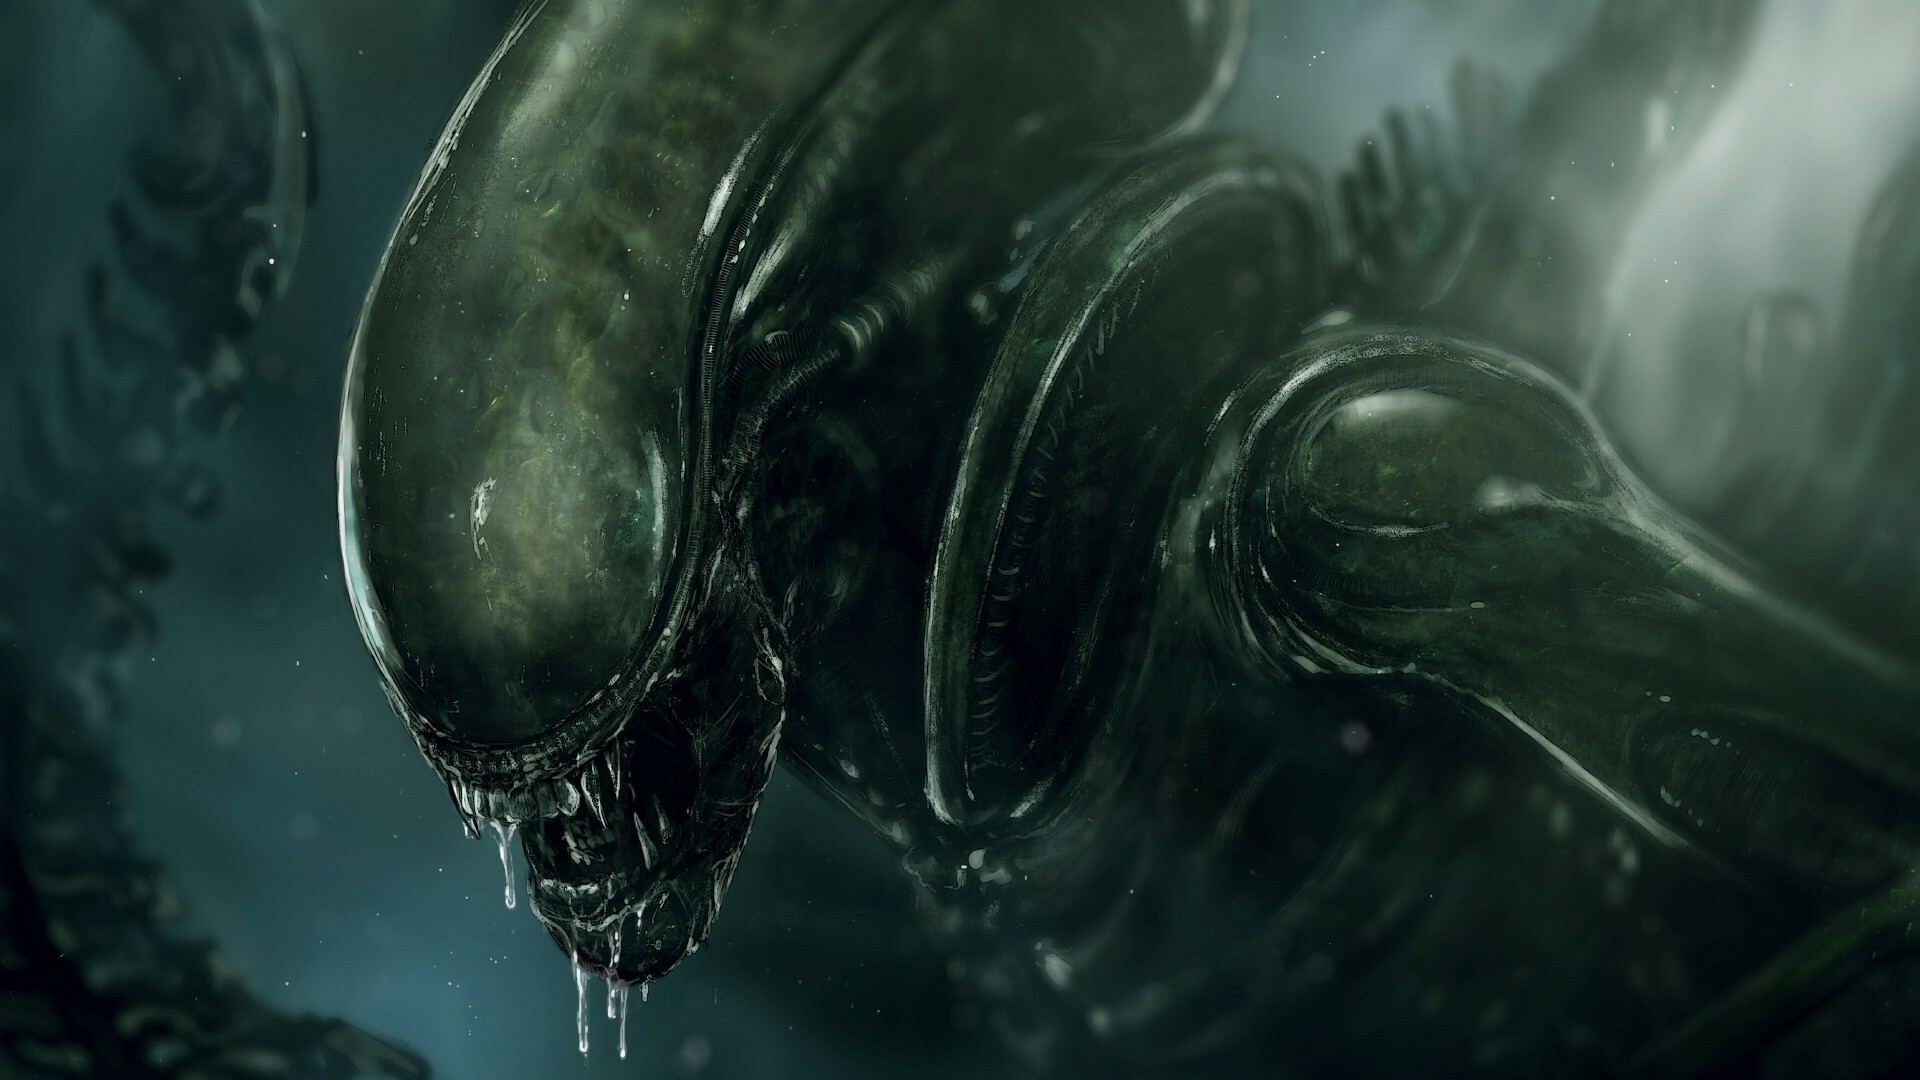 Alien (Movie): Movie, Xenomorph, Ridley Scott directed three films of franchise. 1920x1080 Full HD Wallpaper.